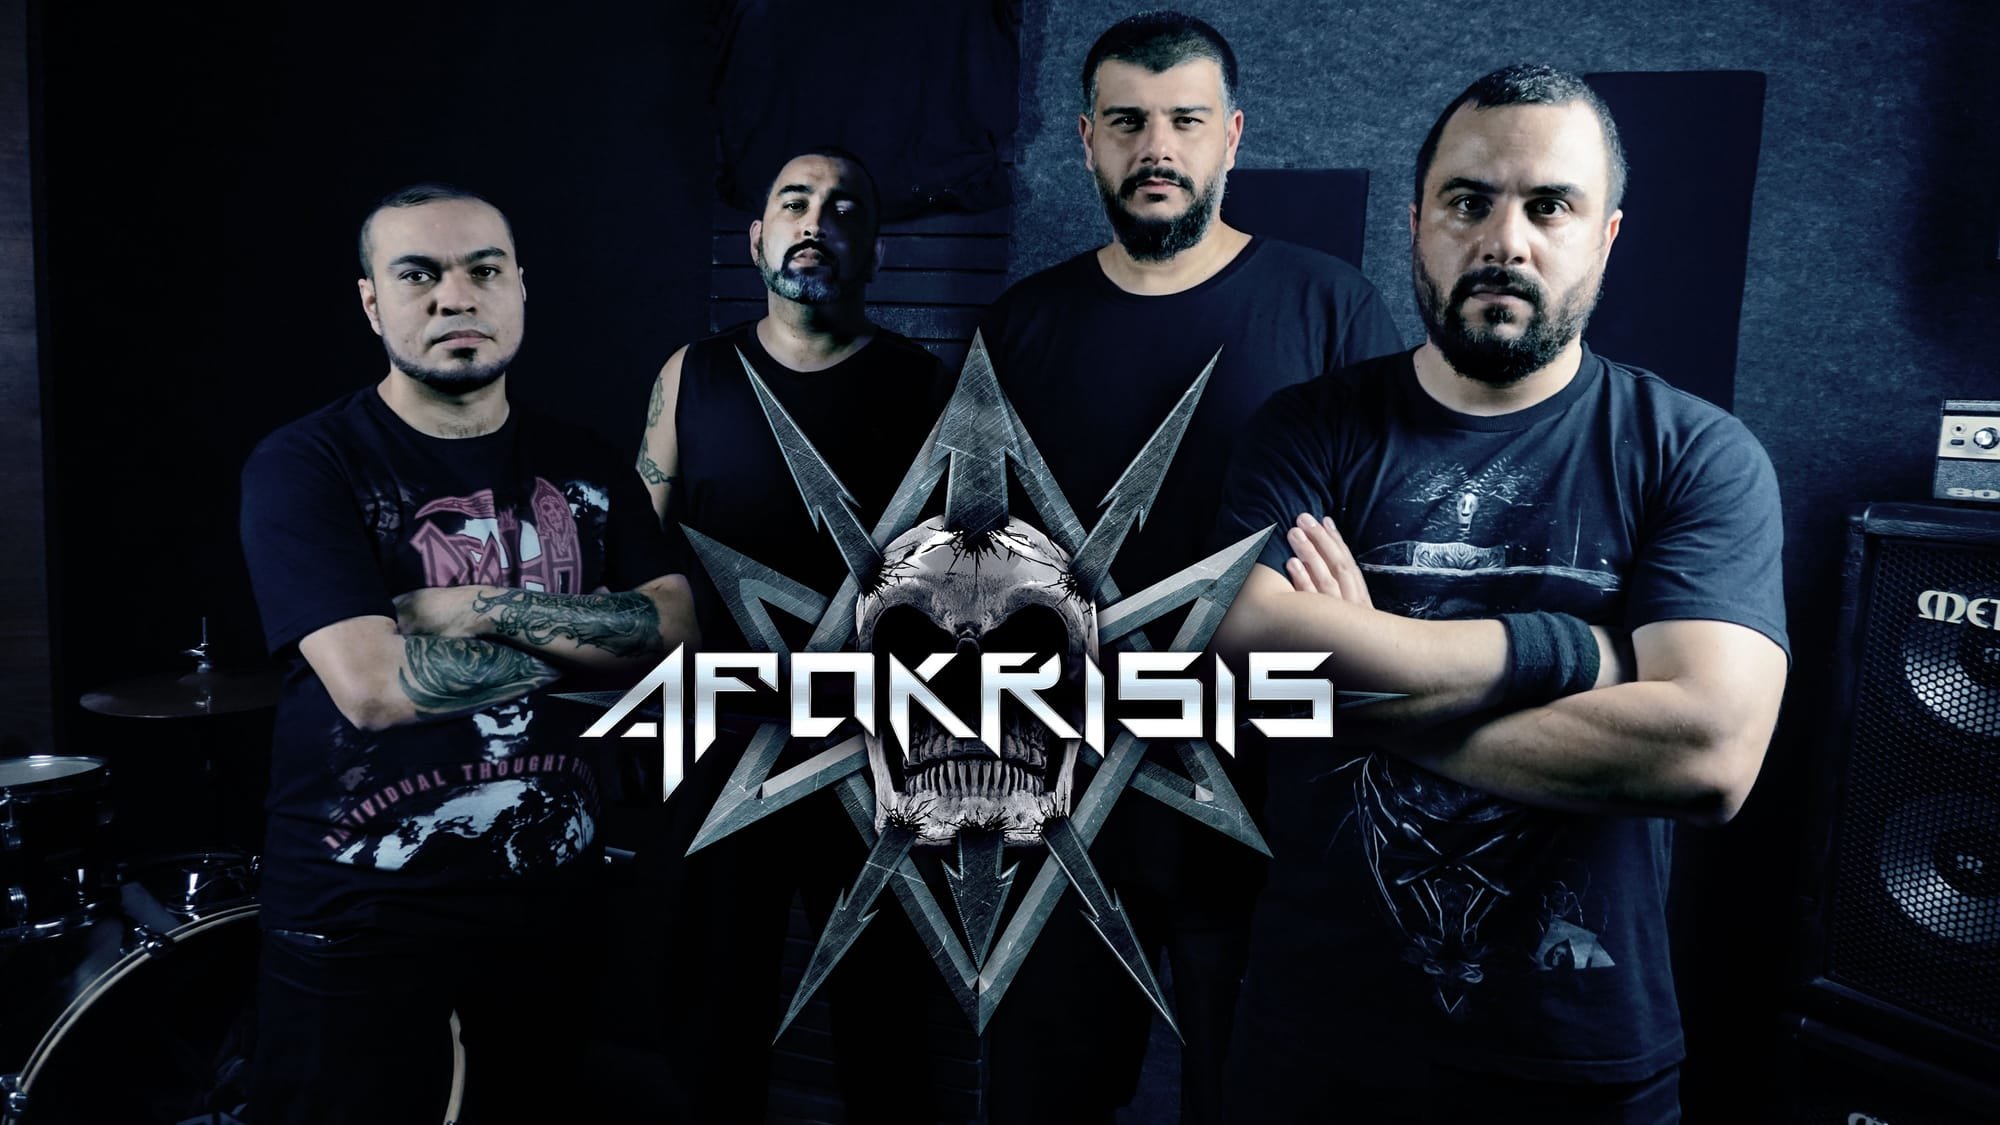 Interview with APOKRISIS